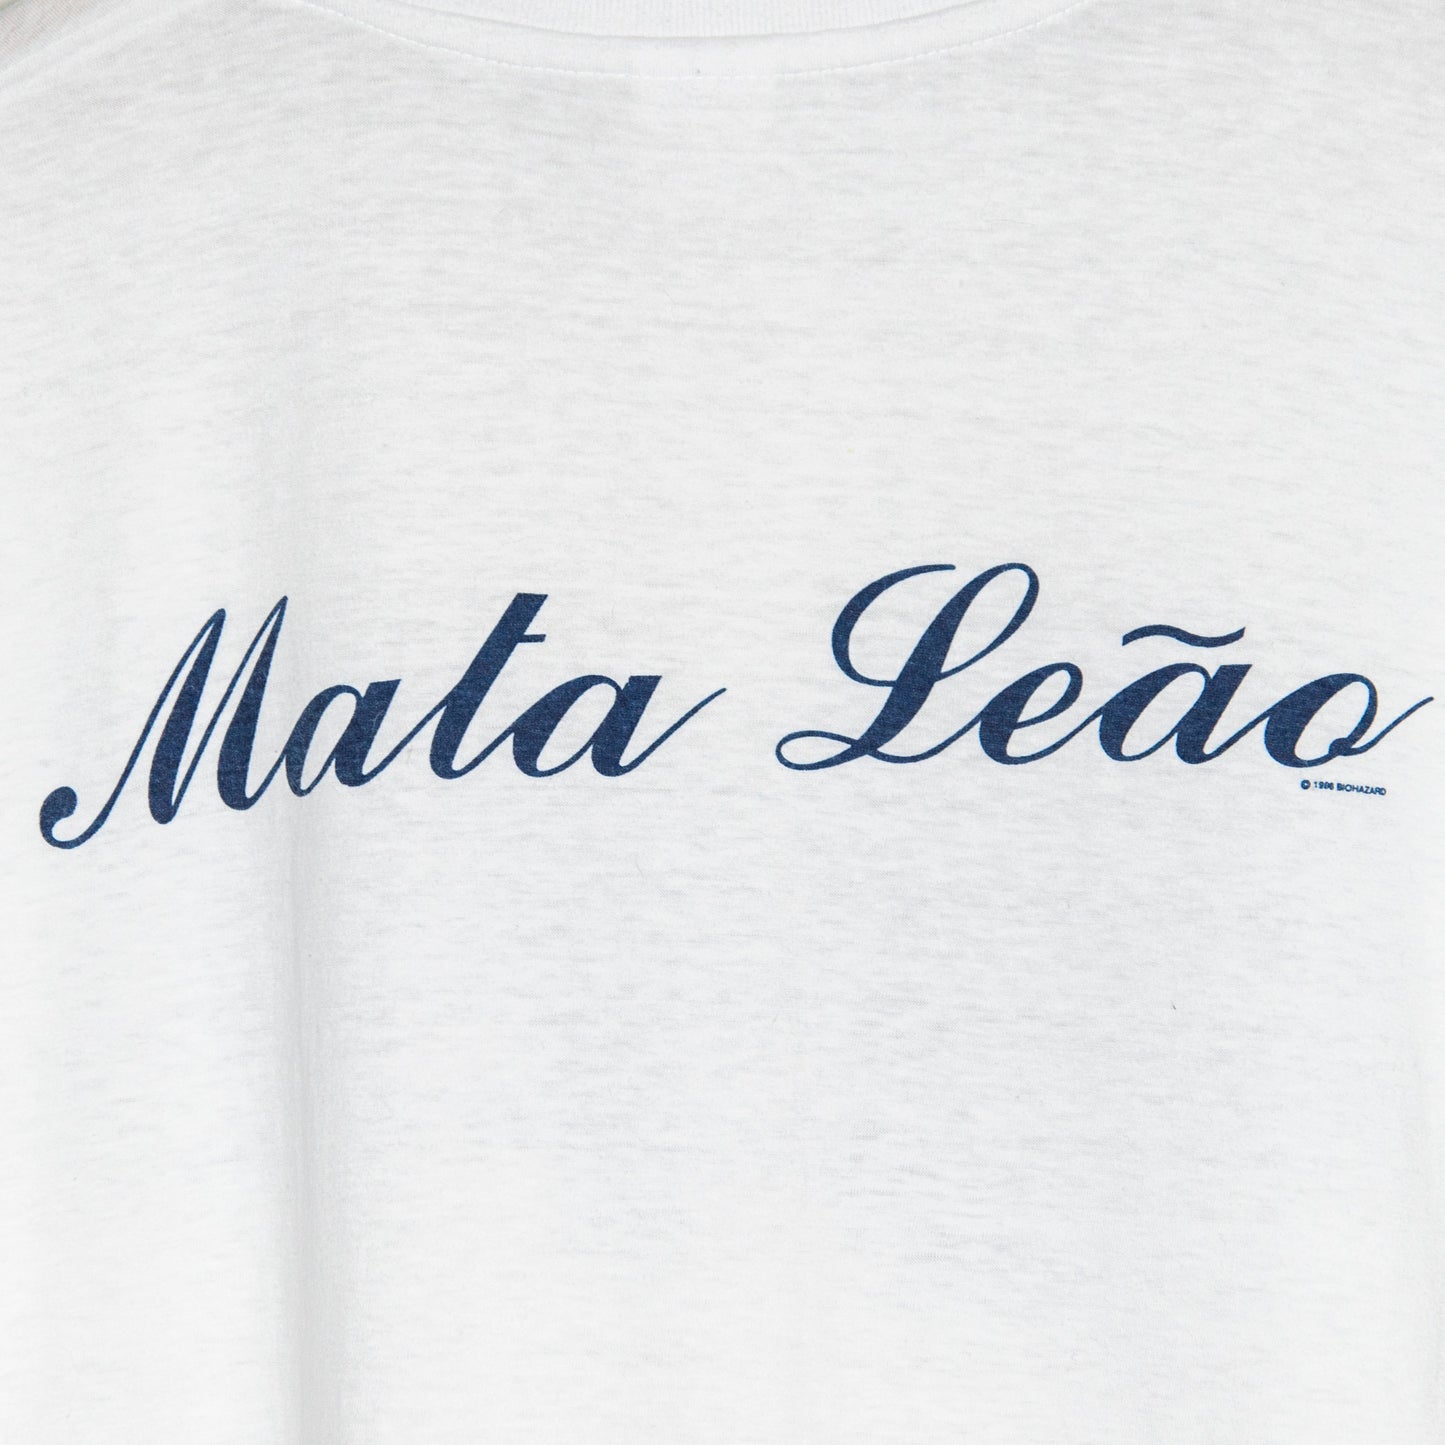 1996 Biohazard 'Mata Leao' T-Shirt L-XL